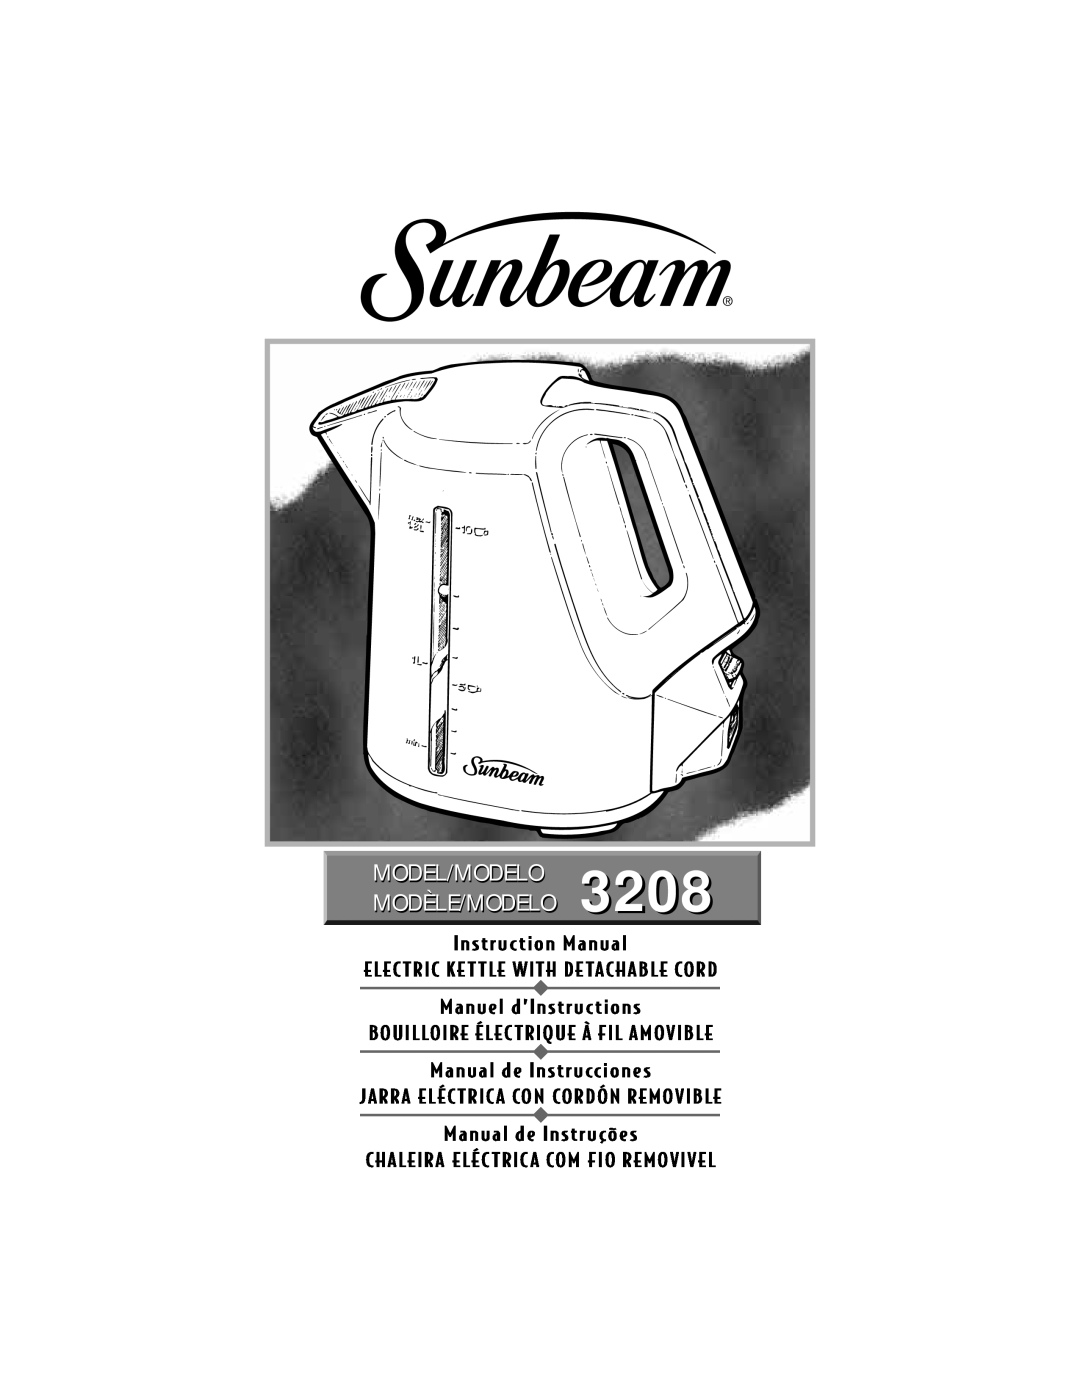 Sunbeam instruction manual MODEL/MODELO 3208 MODÈLE/MODELO 